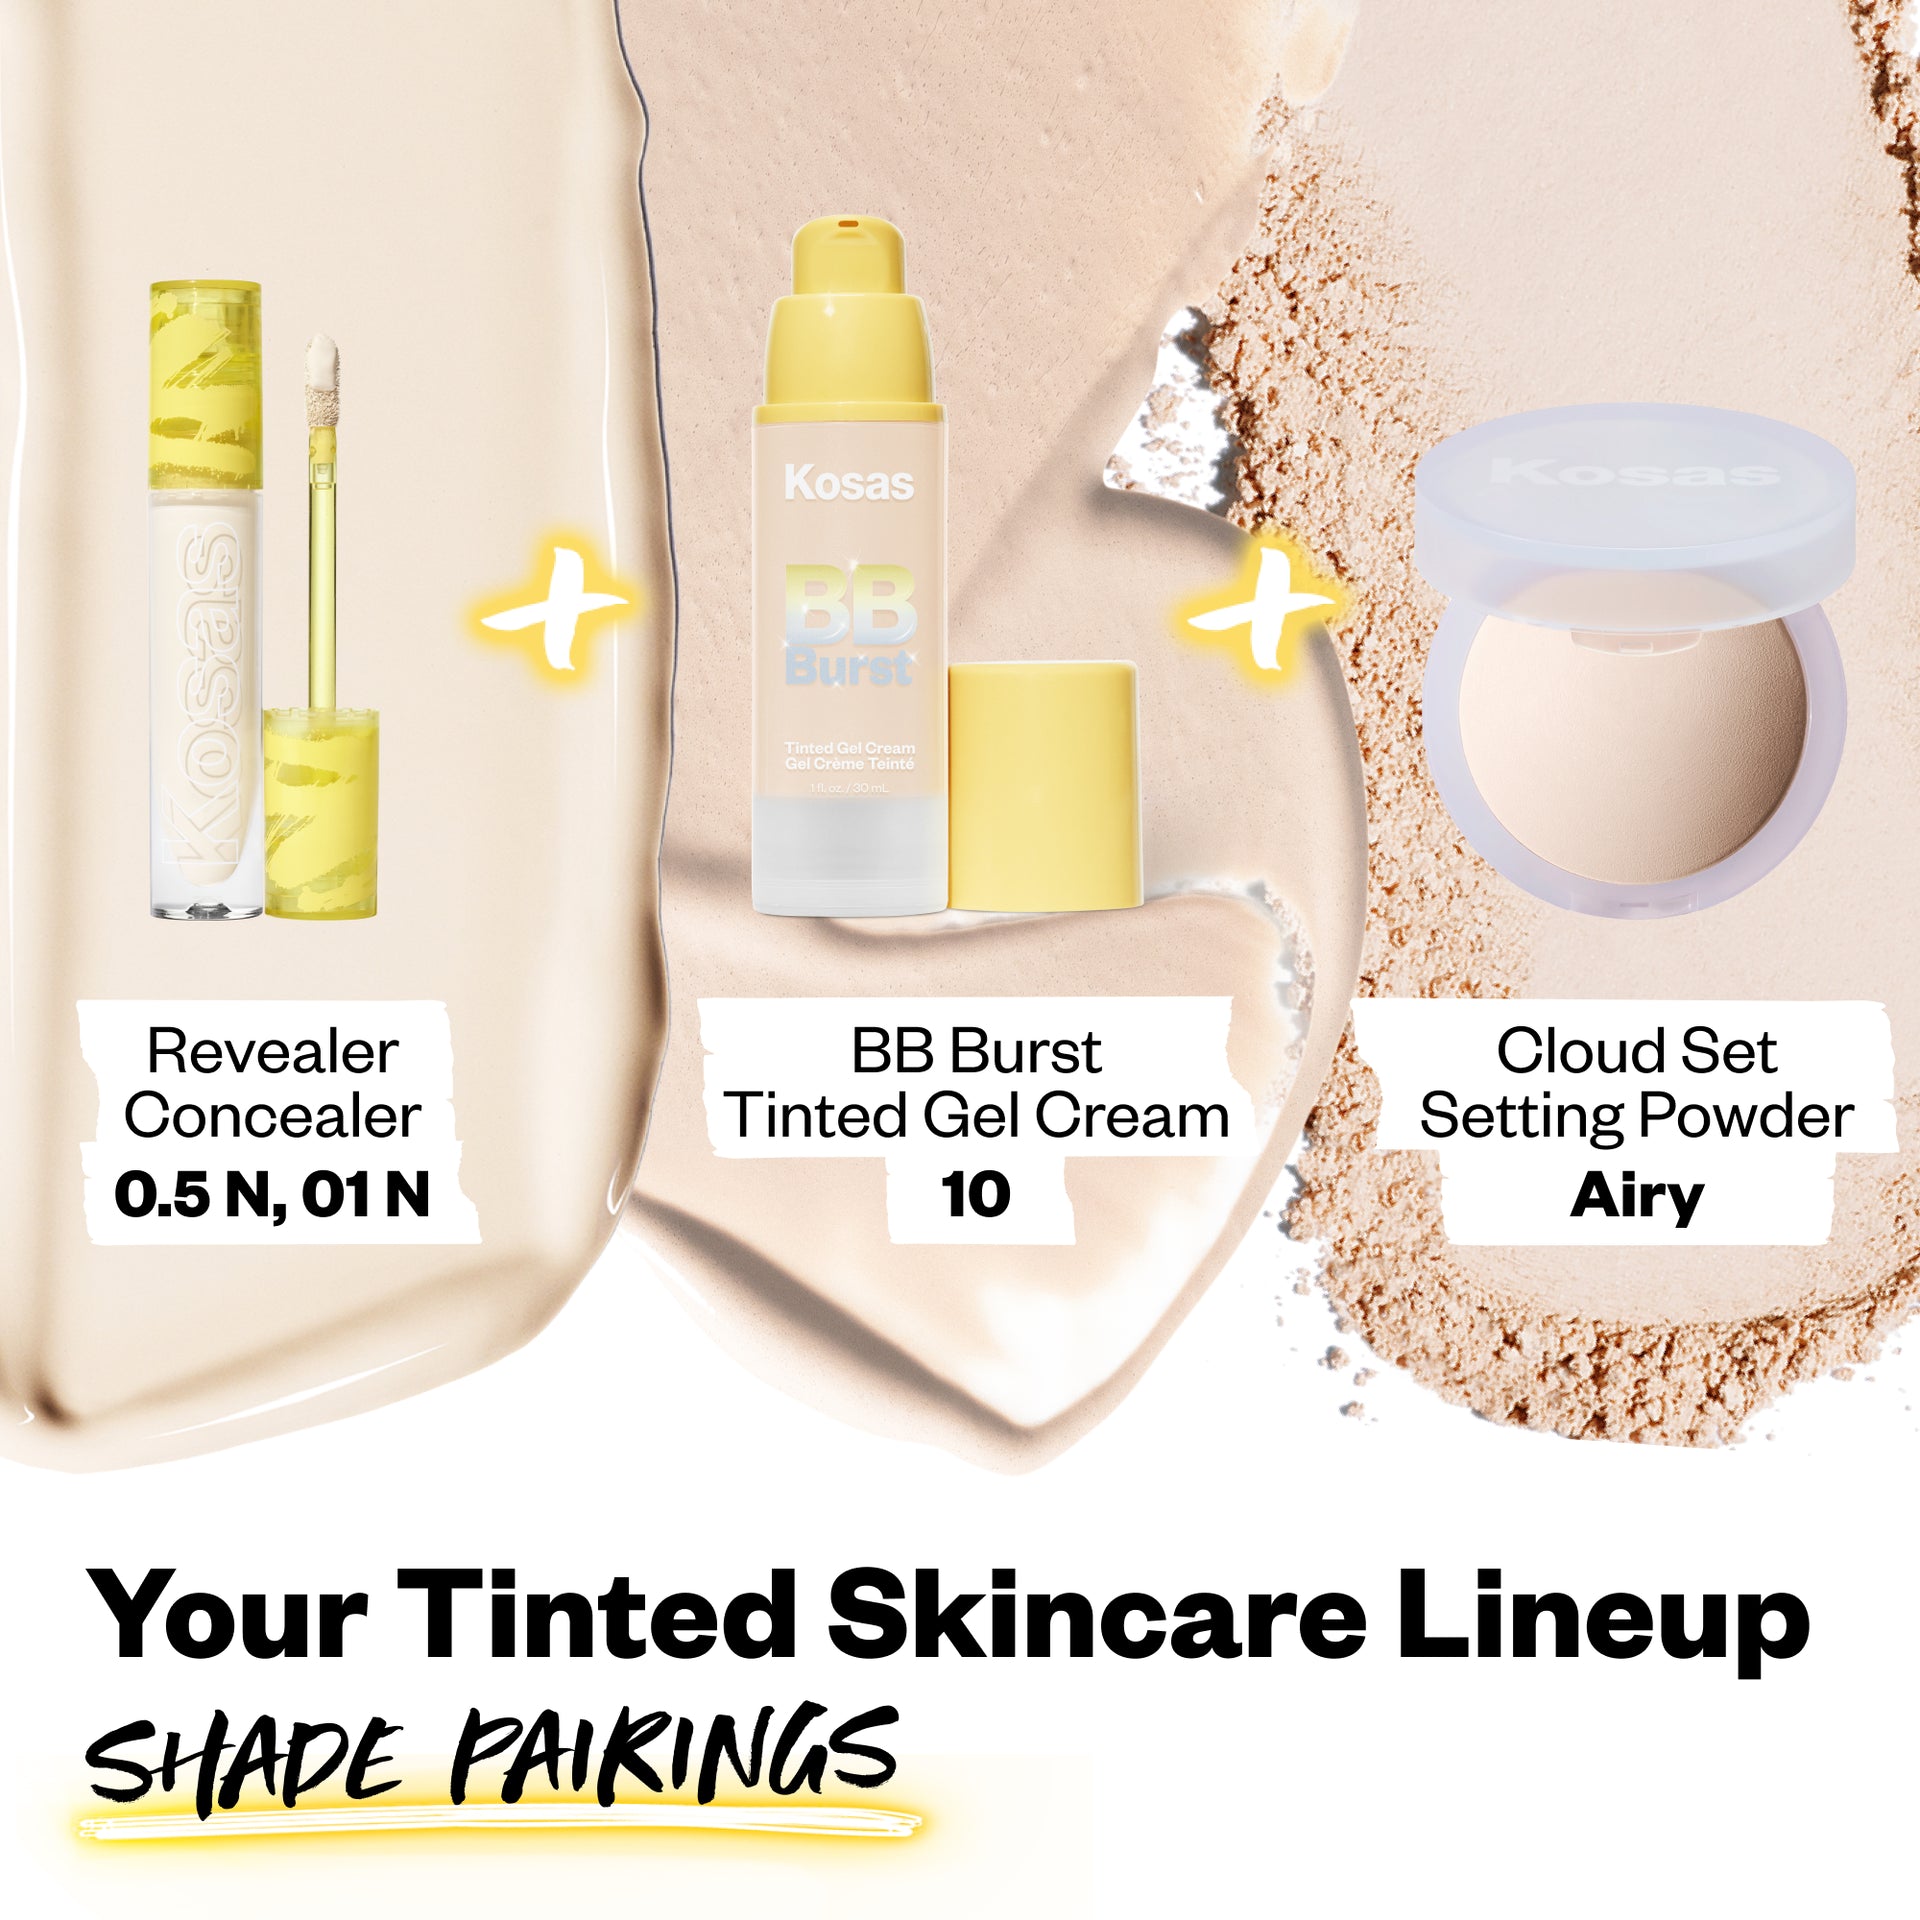 Your tinted skincare lineup shade pairings - Revealer Concealer 0.5 N, 01 N + BB burst tinted gel cream 10, Cloud set setting powder Airy.